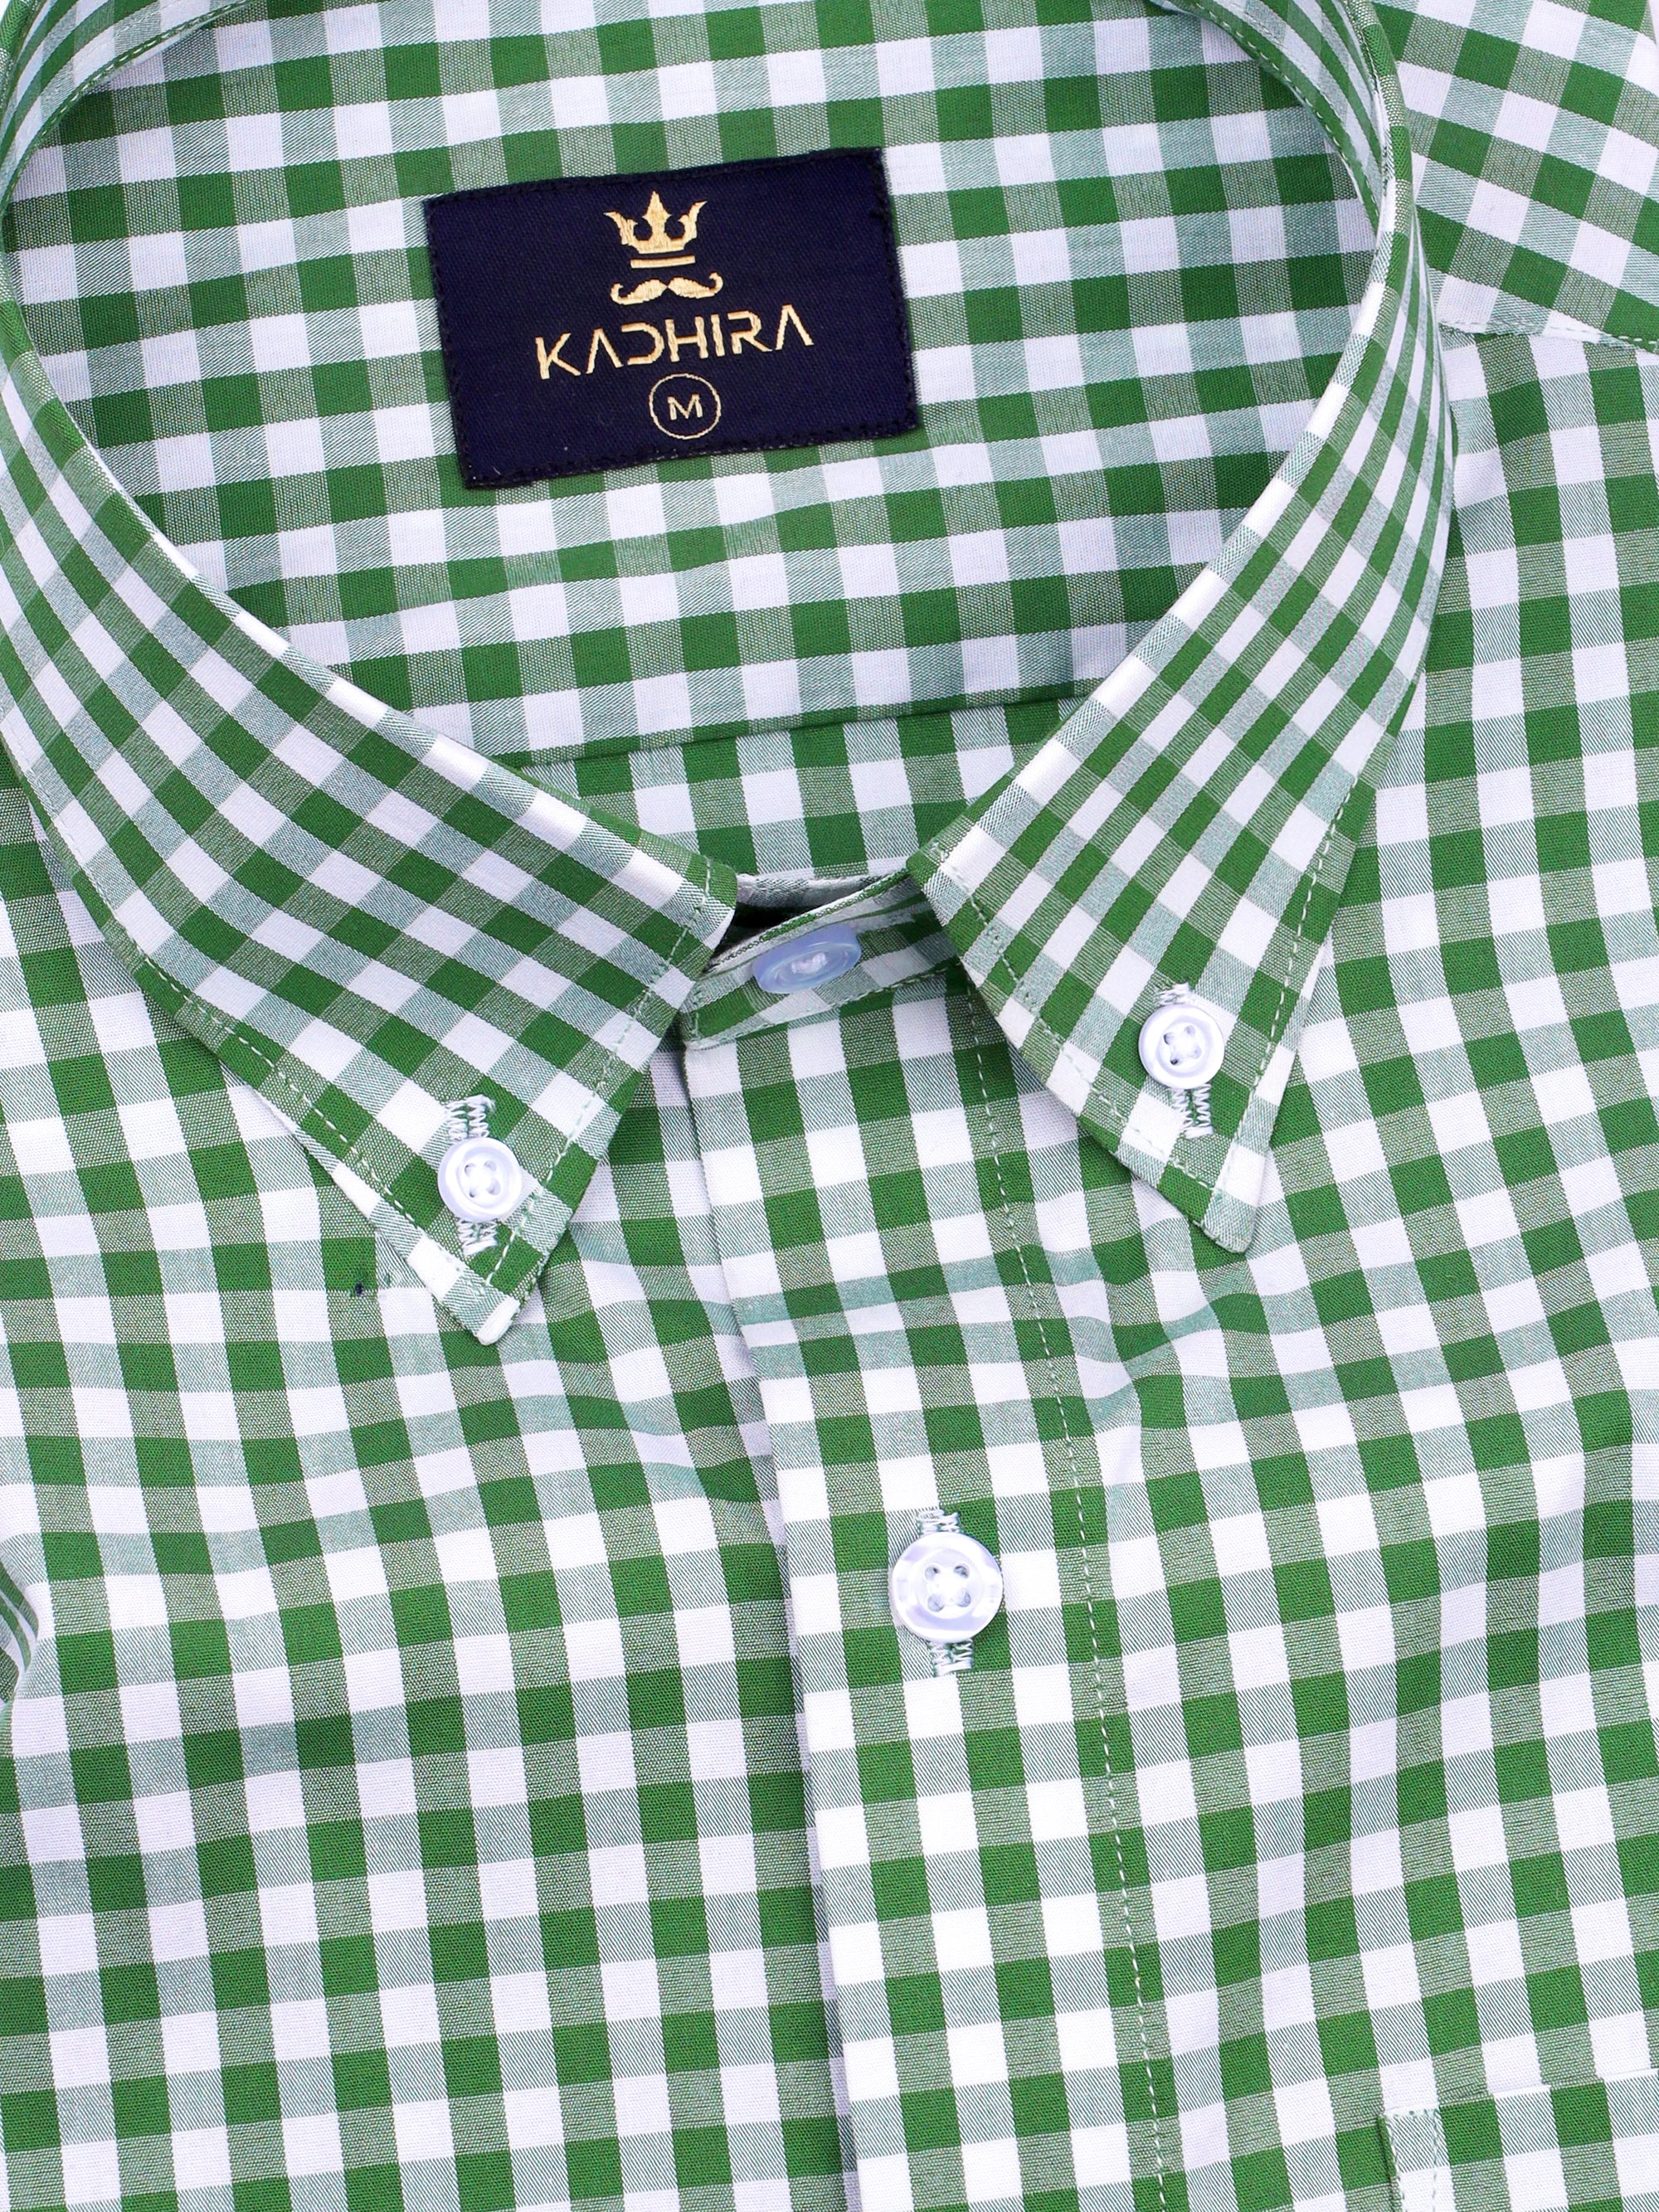 Fern Green With White Gingham check Premium Cotton Shirt